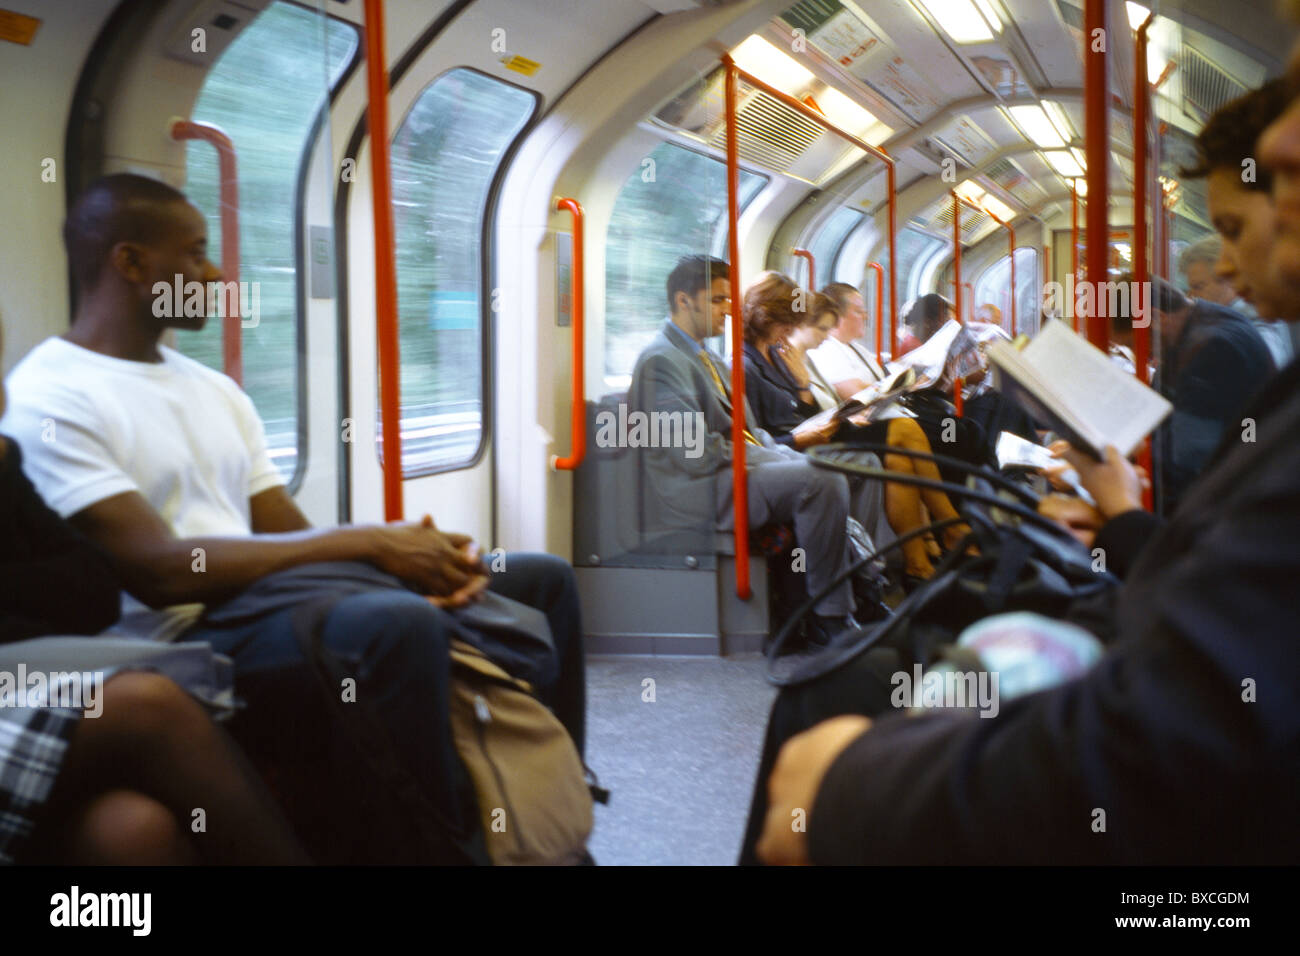 London Underground Train Interior People Reading Stock Photo - Alamy